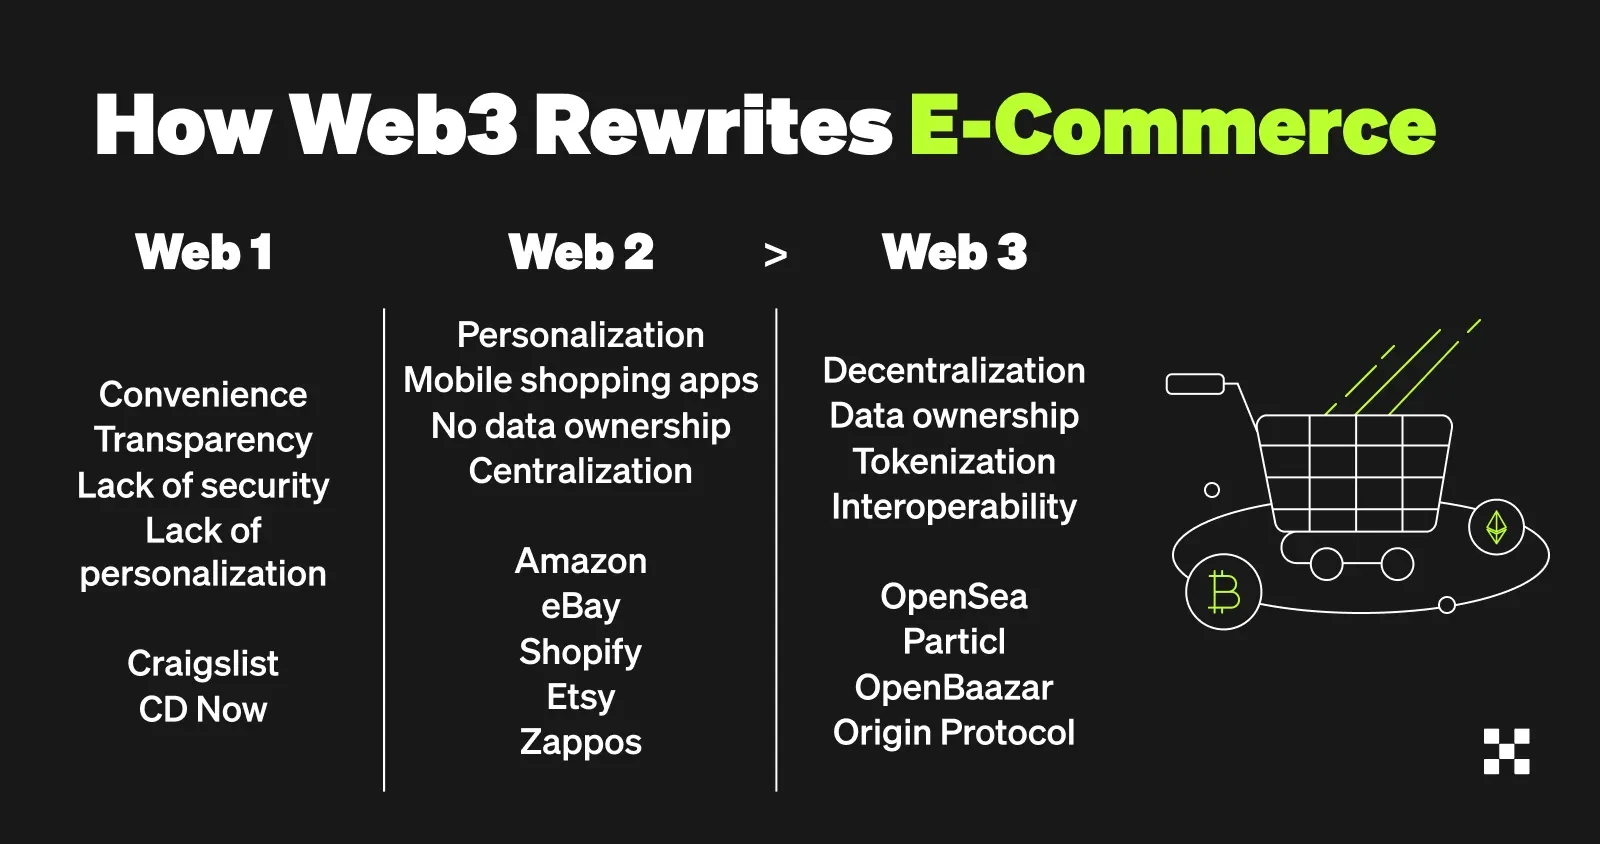 How Web3 rewrites e-commerce